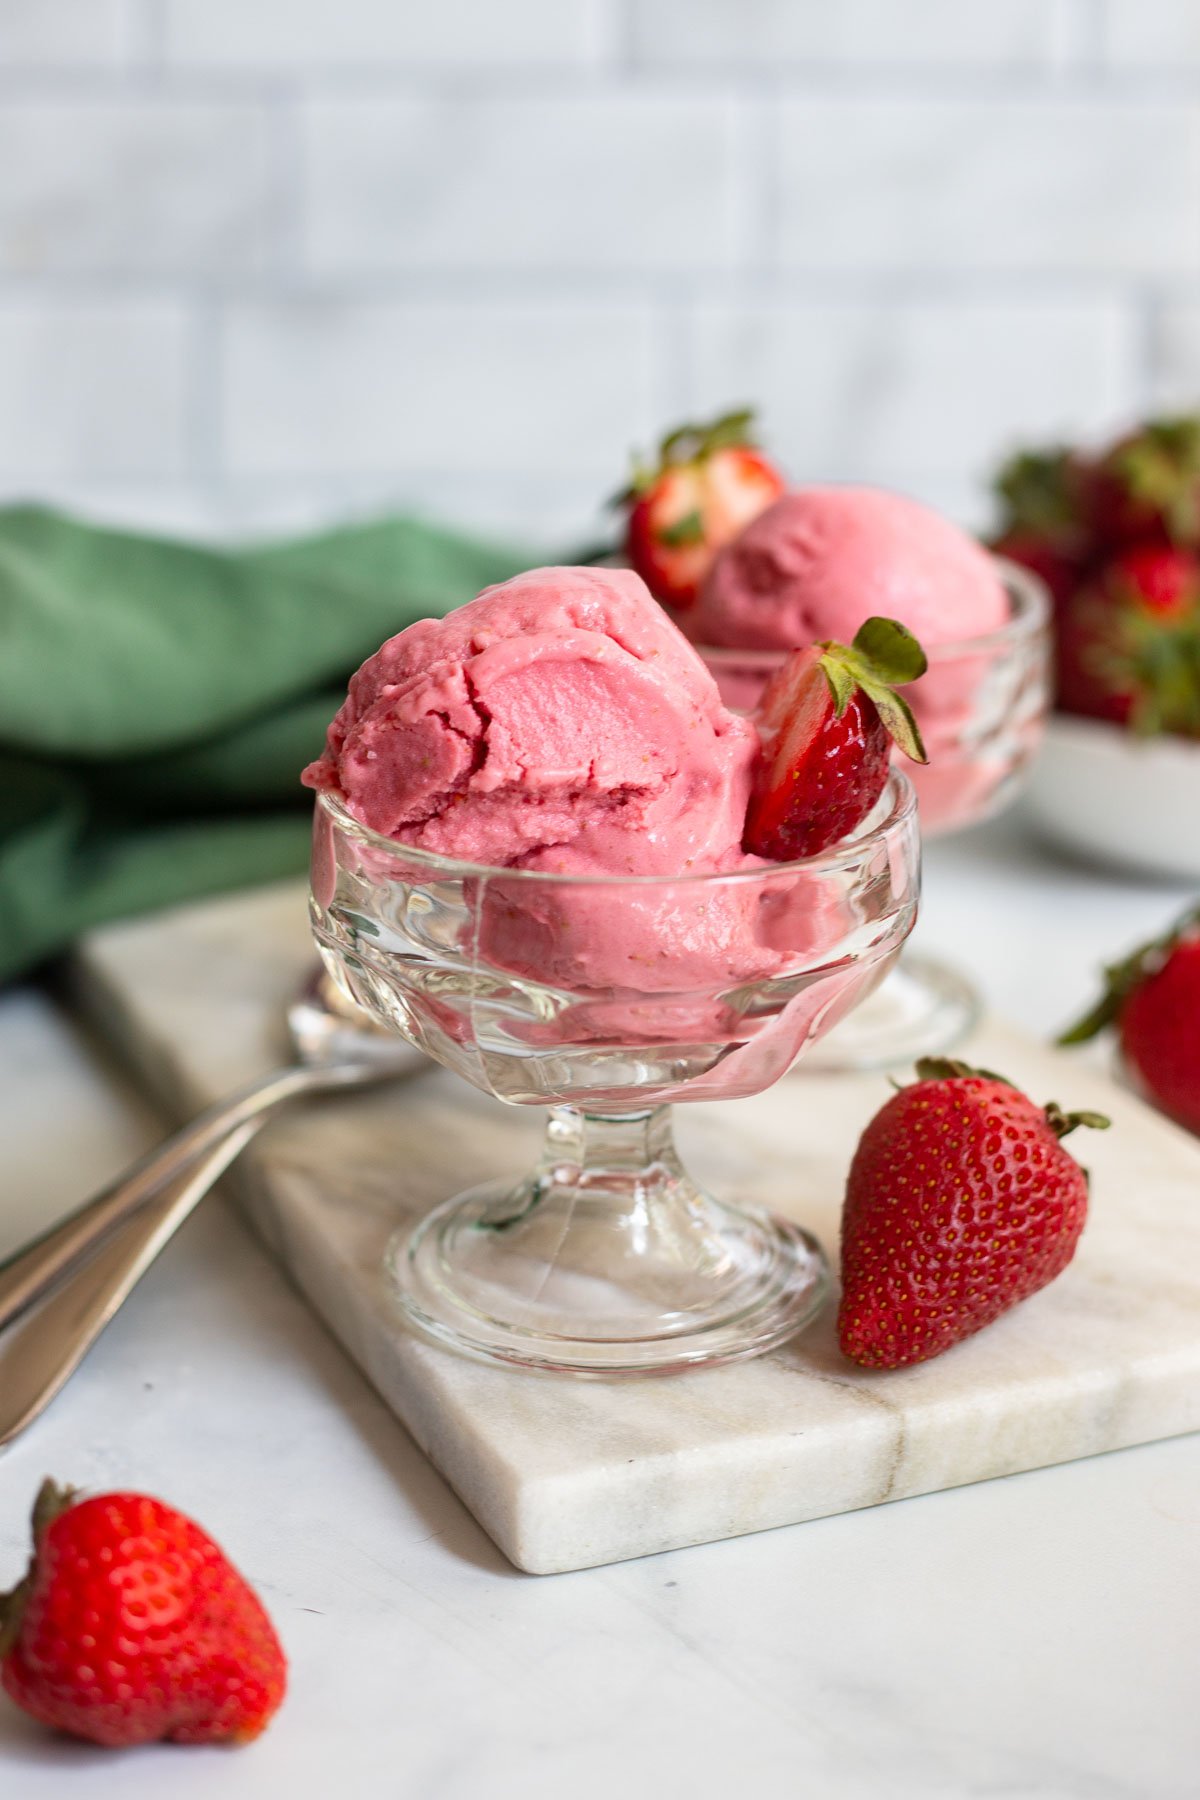 vegan strawberry frozen yogurt in a glass ice cream dish with a fresh strawberry for garnish.